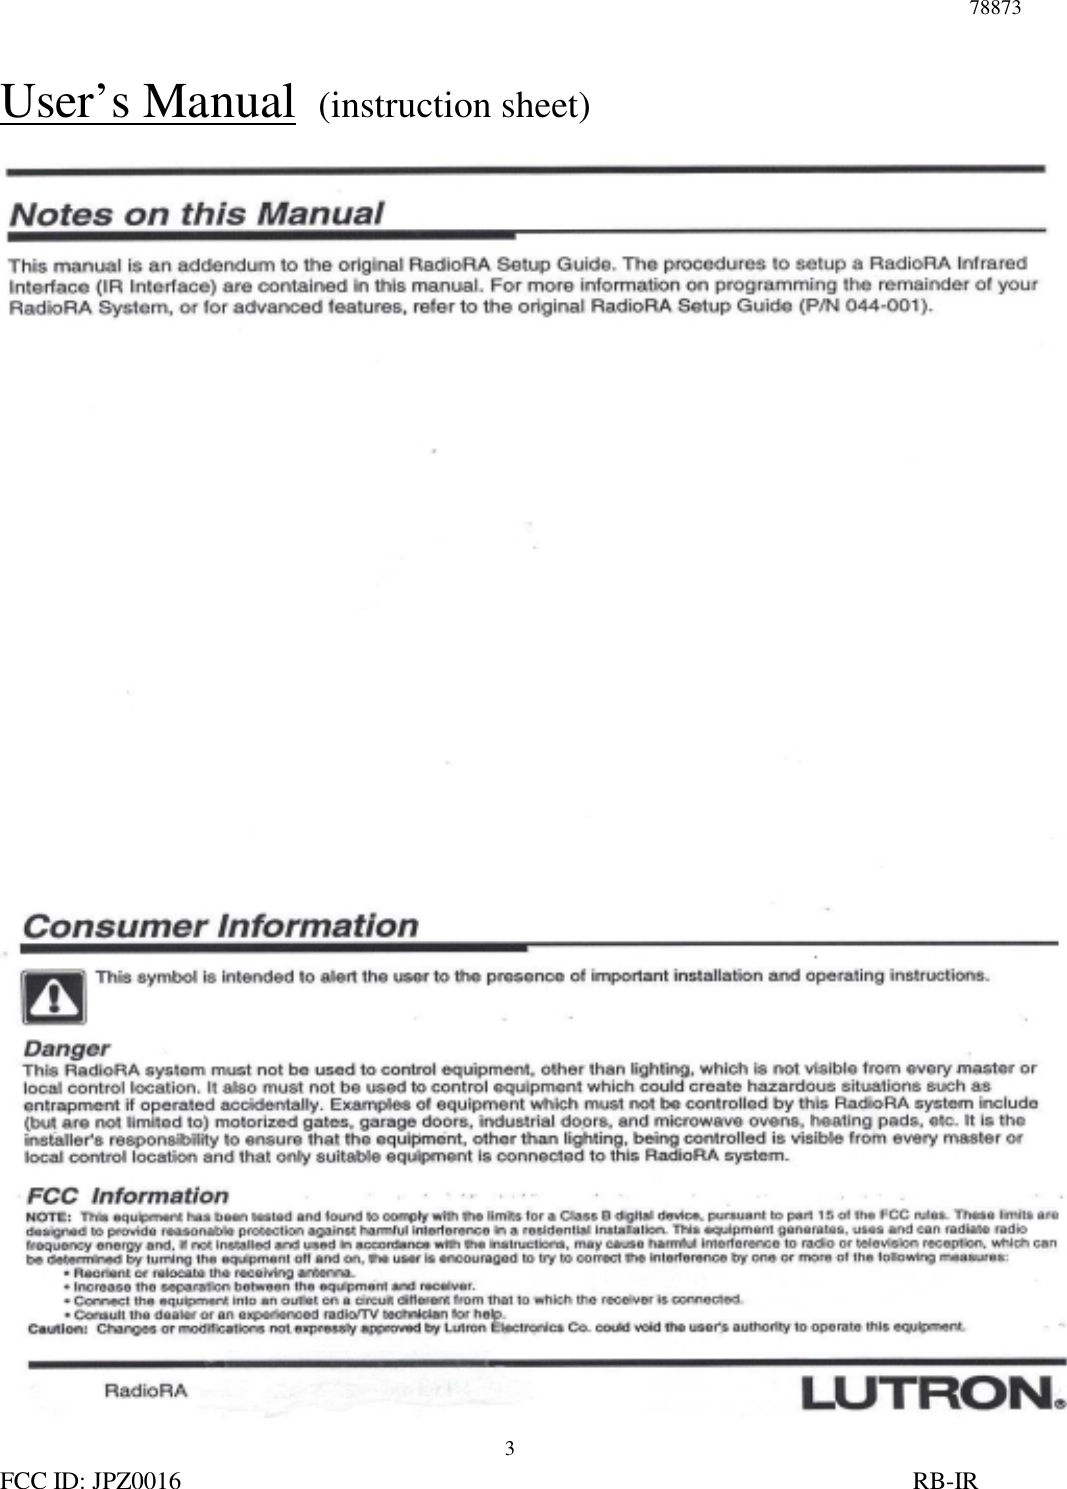 78873FCC ID: JPZ0016                                                                                                                     RB-IR3User’s Manual  (instruction sheet)